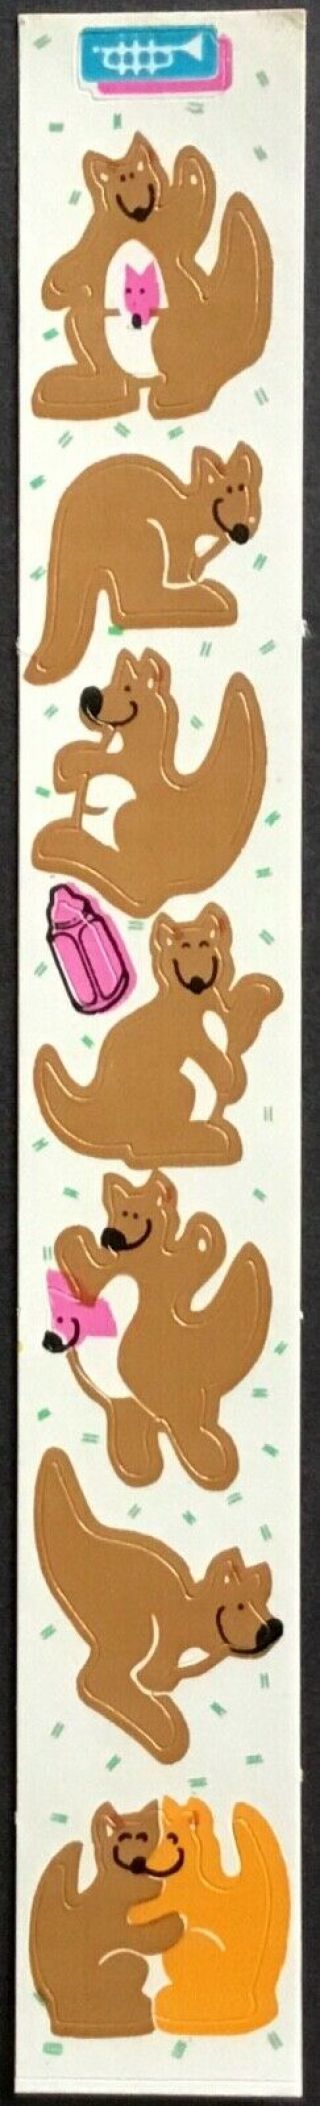 Vintage Stickers - Cardesign Toots - Kangaroos - Dated 1983